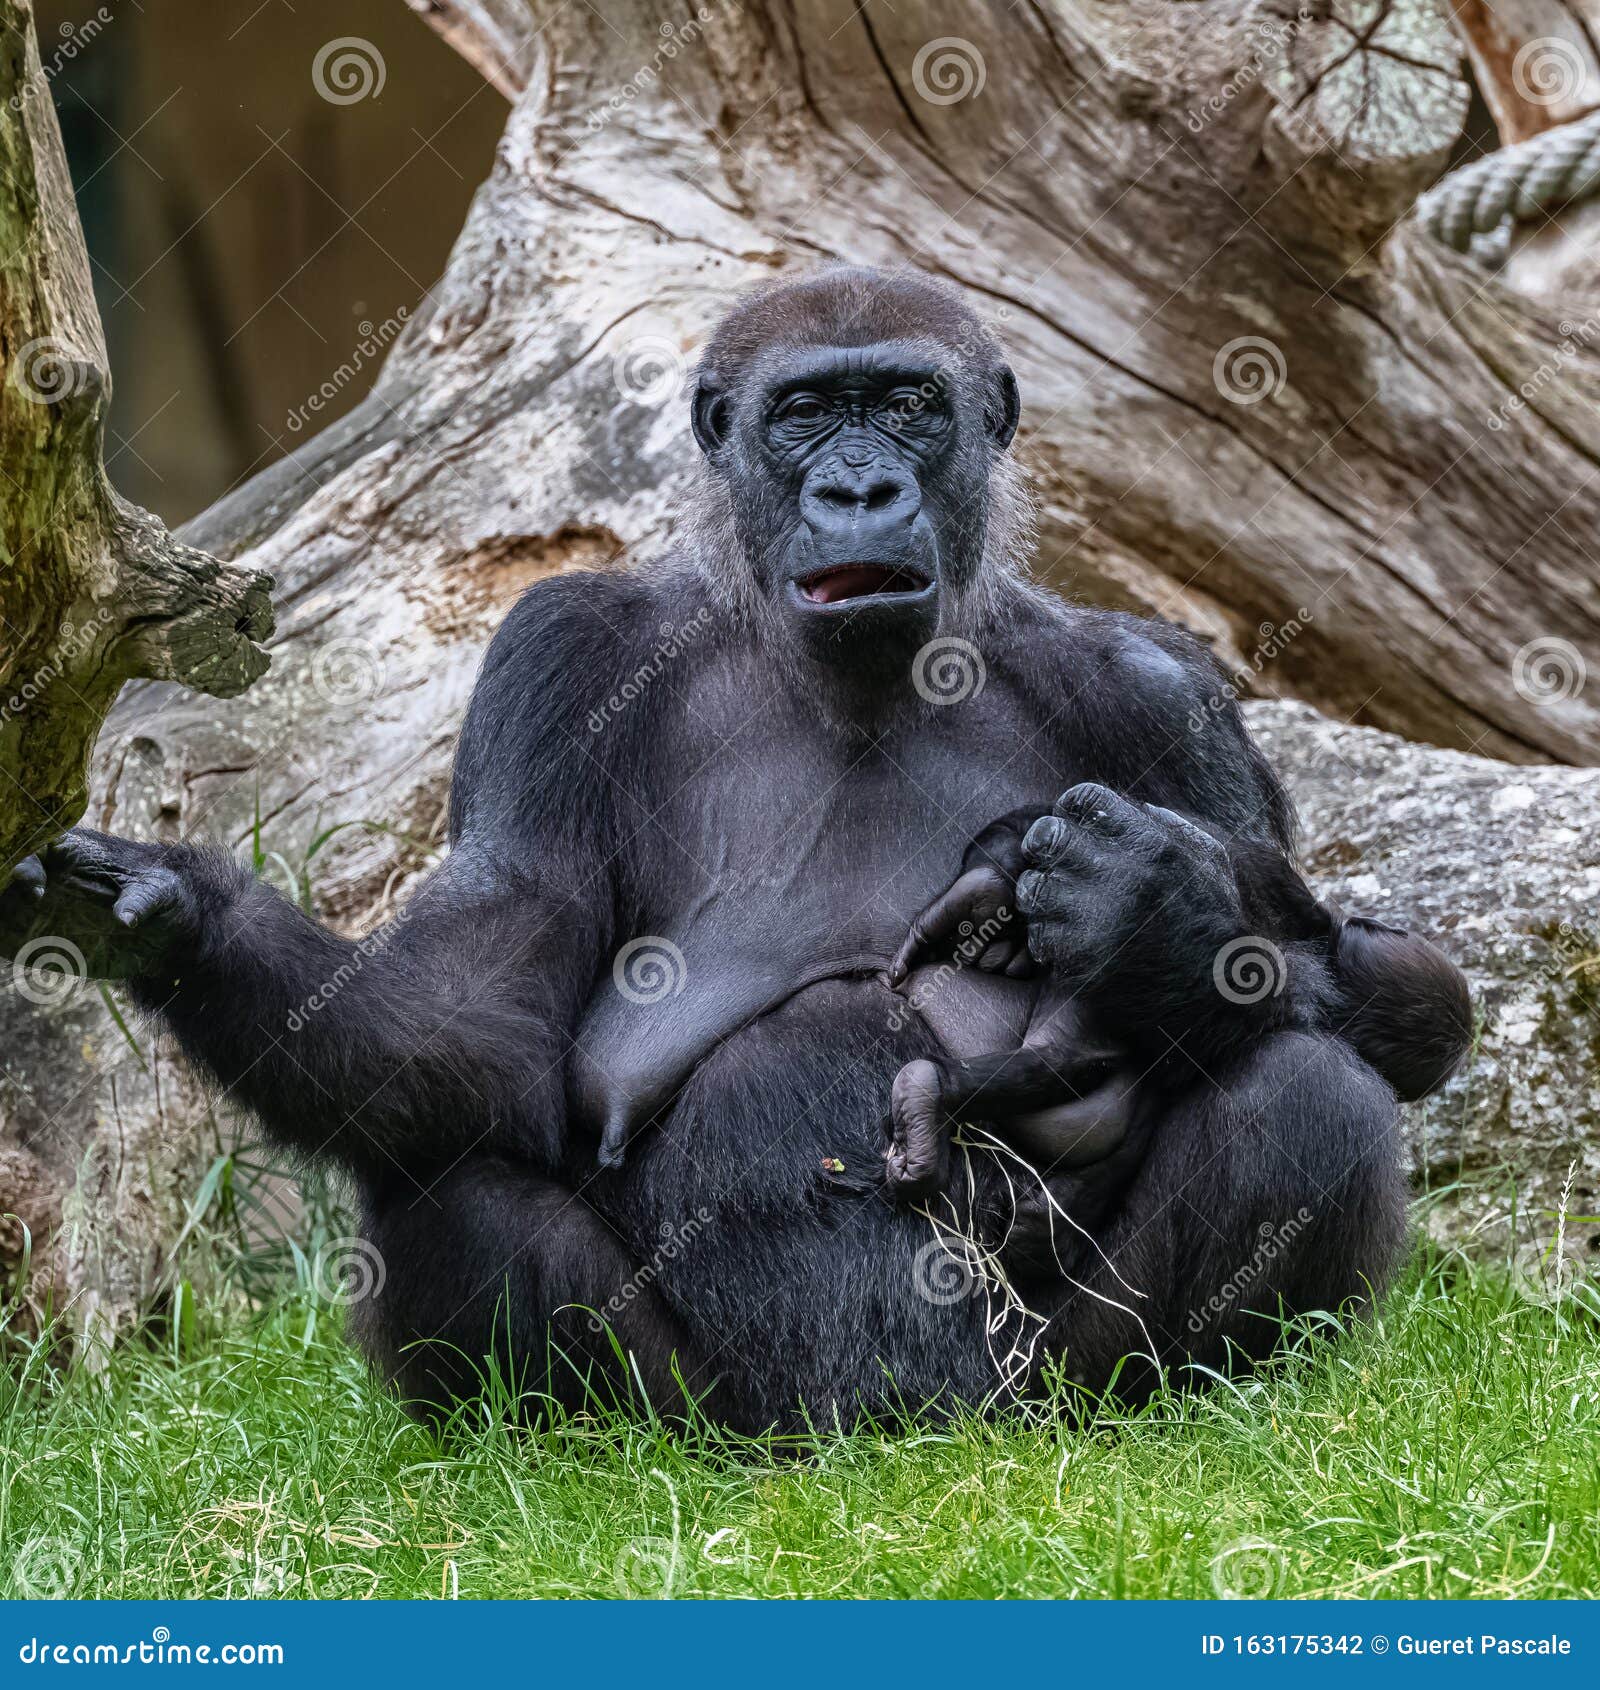 gorilla-monkey-female-sitting-grass-portrait-great-ape-baby-gorilla-monkey-female-163175342.jpg